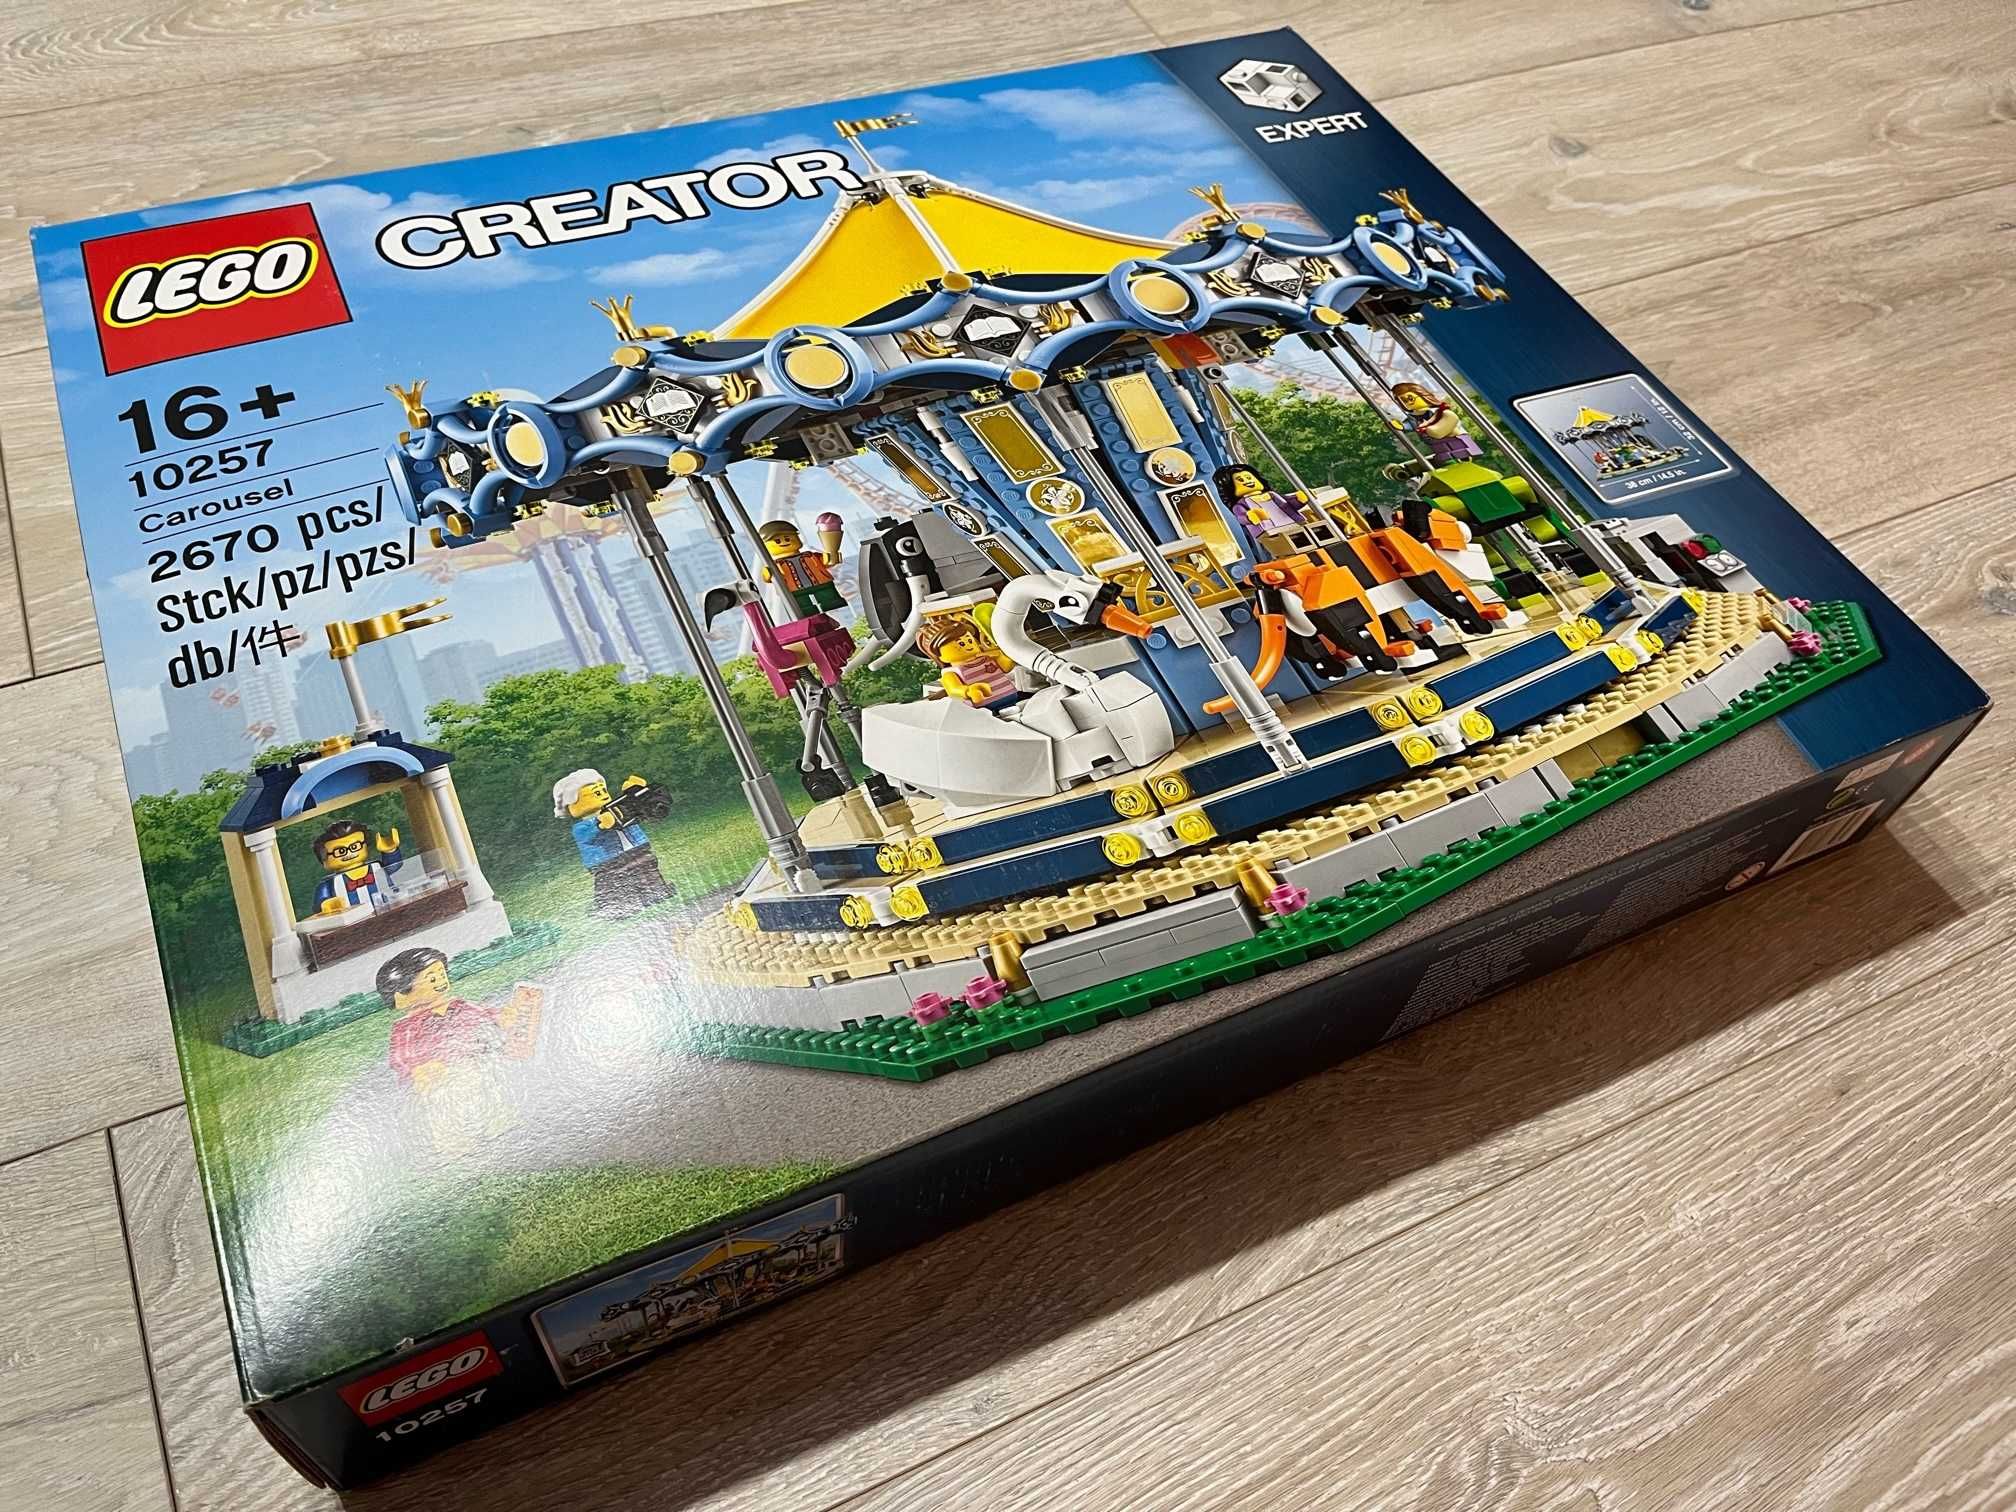 LEGO 10257 Carousel - NOU SIGILAT Brasov • OLX.ro